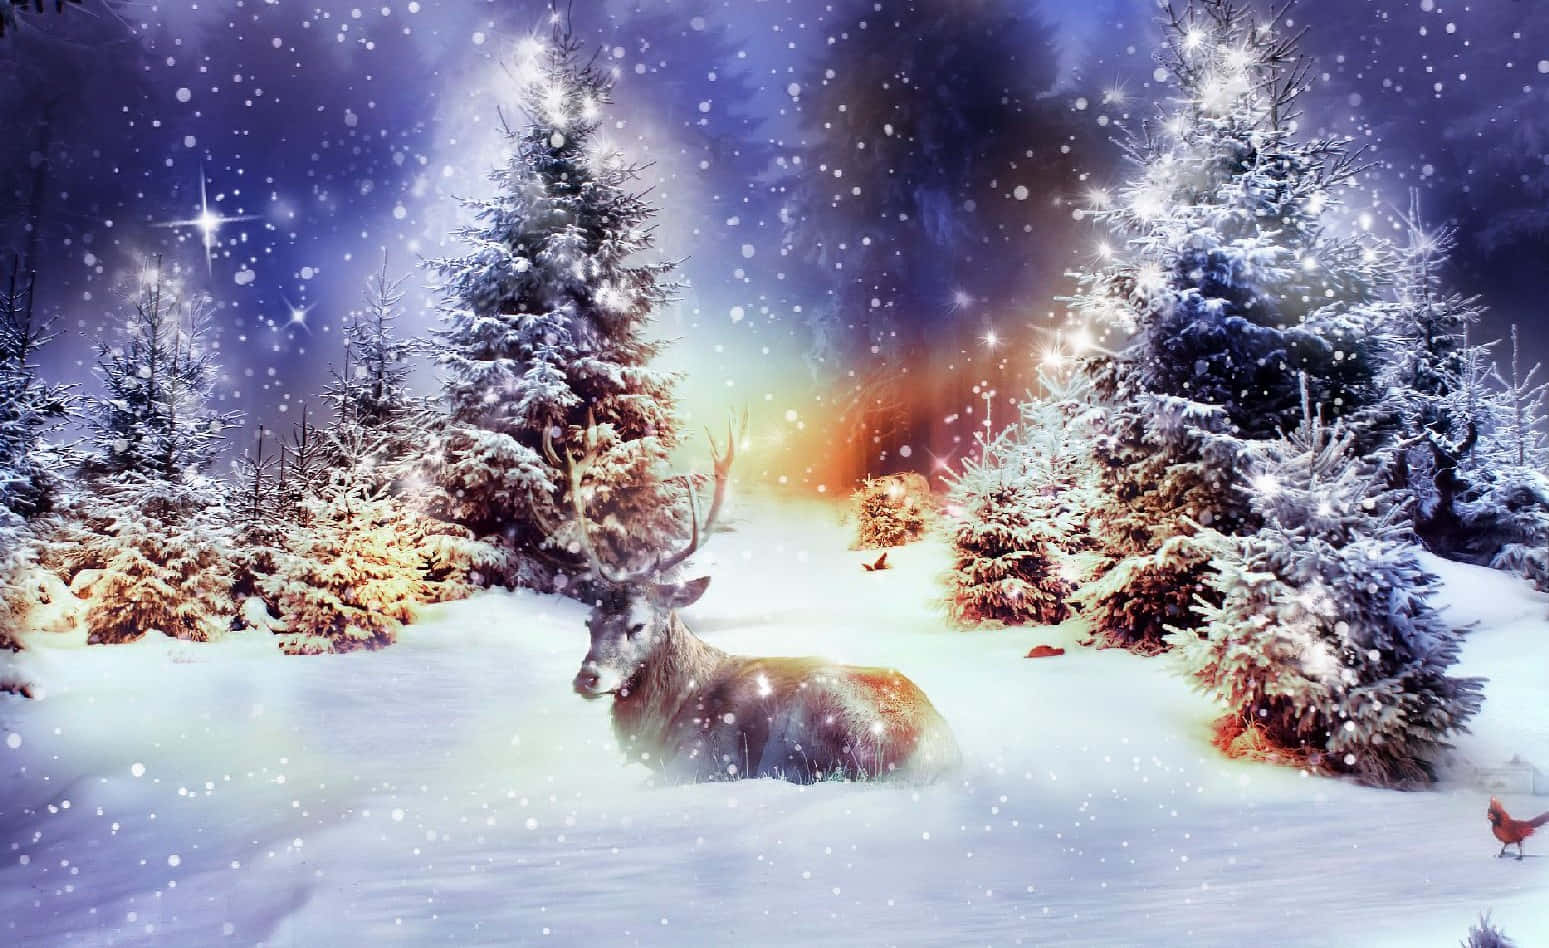 Enchanting Winter Christmas Scene